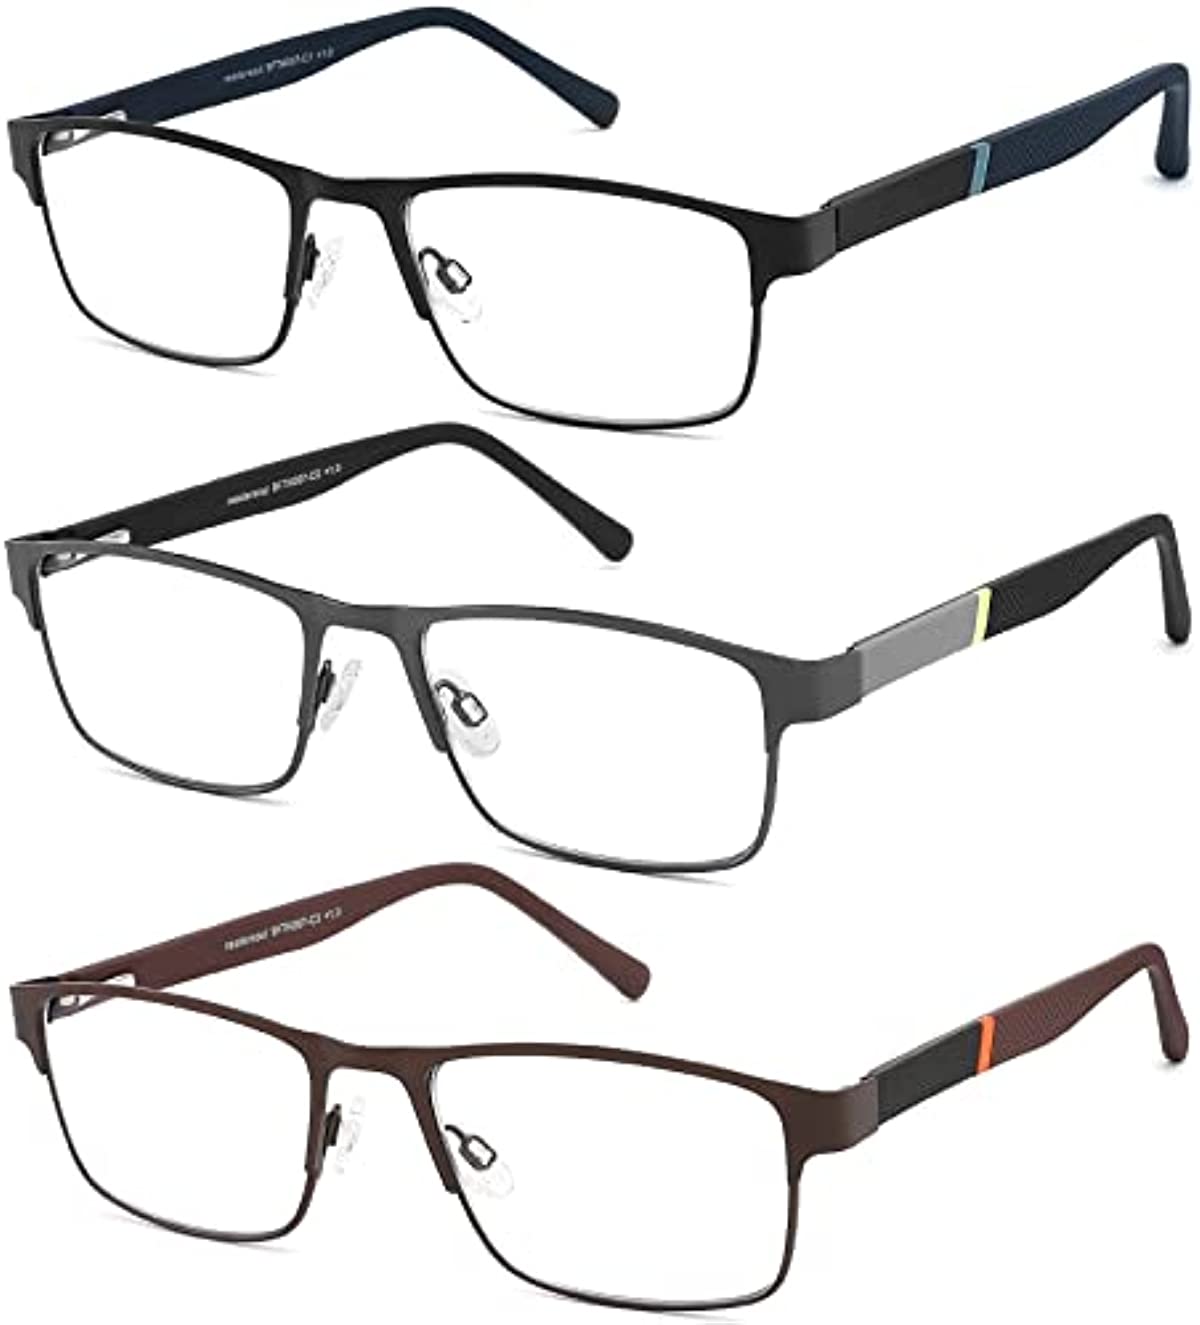 3-Pack Reading Glasses for Men Blue Light Blocking Trendy Metal Frame Computer Readers with Spring Hinges Anti Eye Strain/Glare Uv Ray Filter Eyeglasses(+1.5 Magnification Strength)